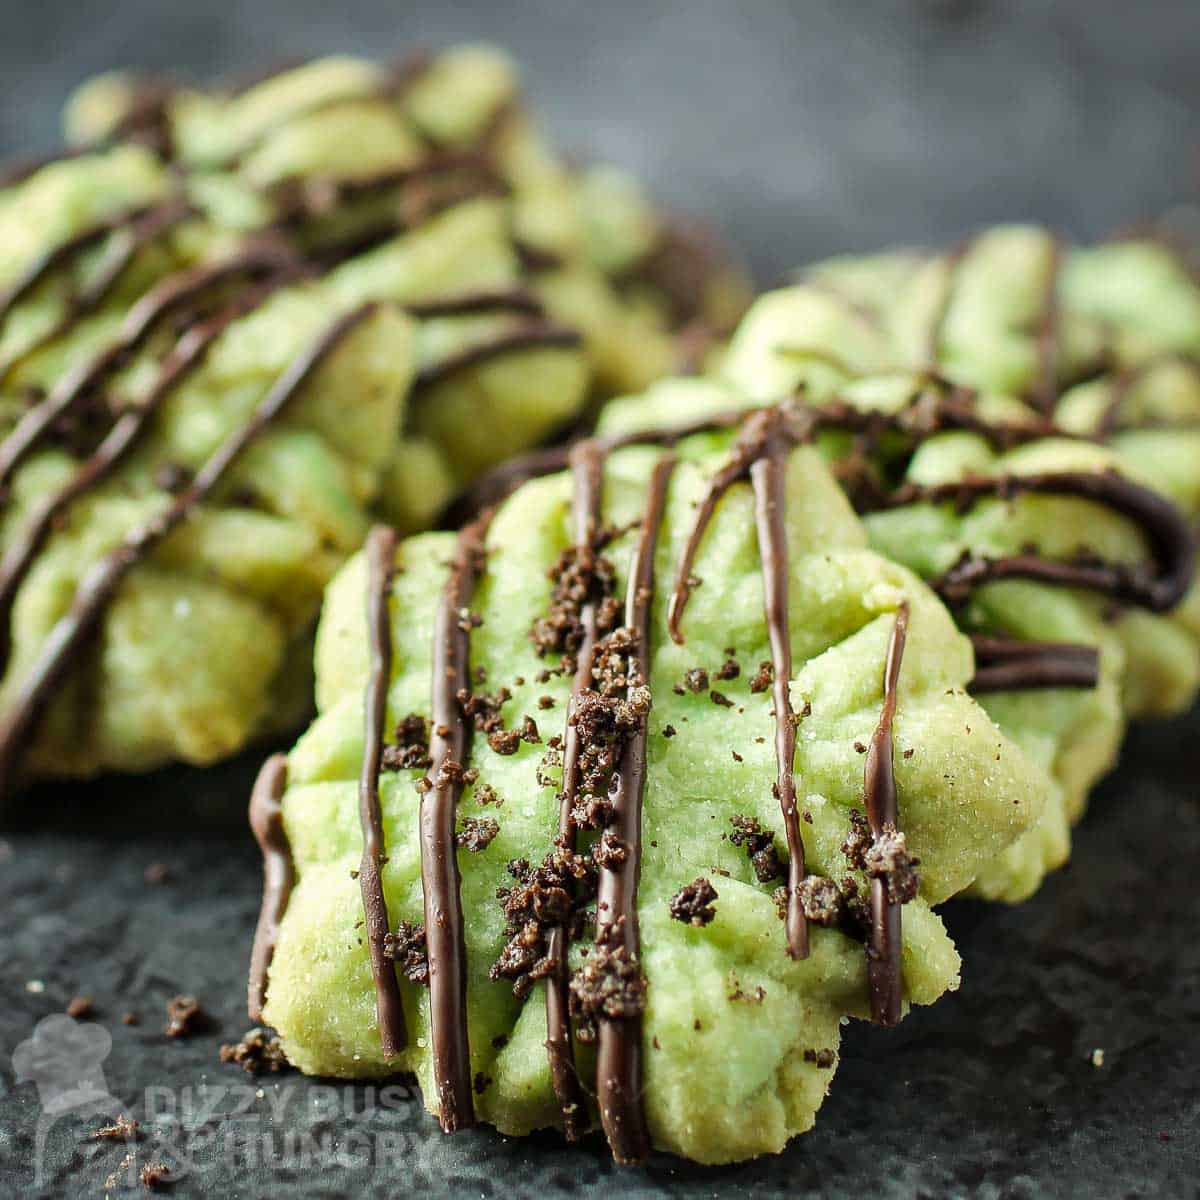 Chocolate Mint Shortbread Cookies